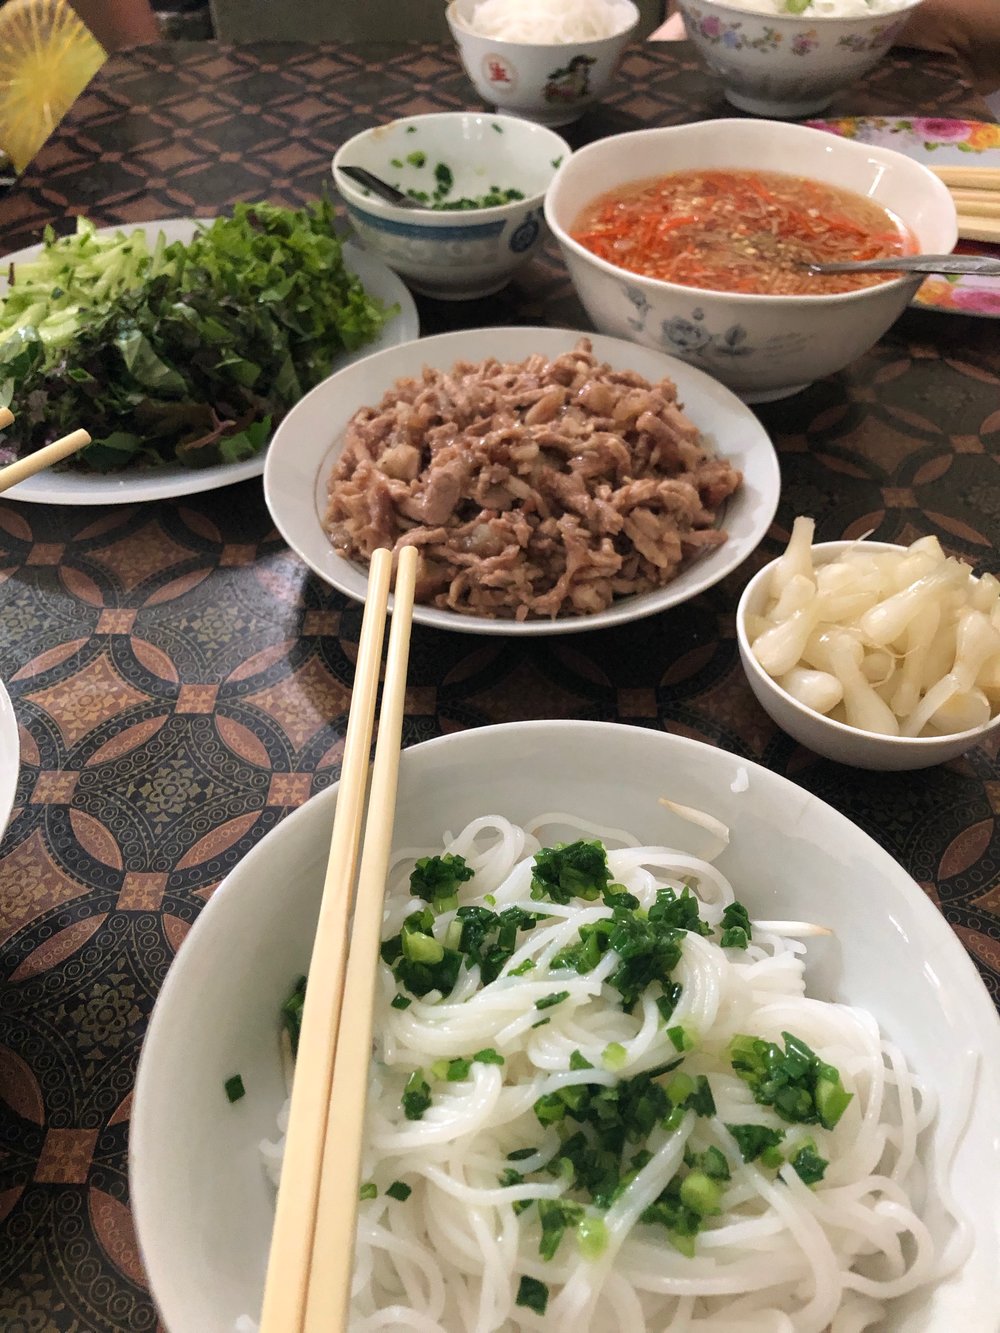  Bun ram - Caramelized pork with noodles  